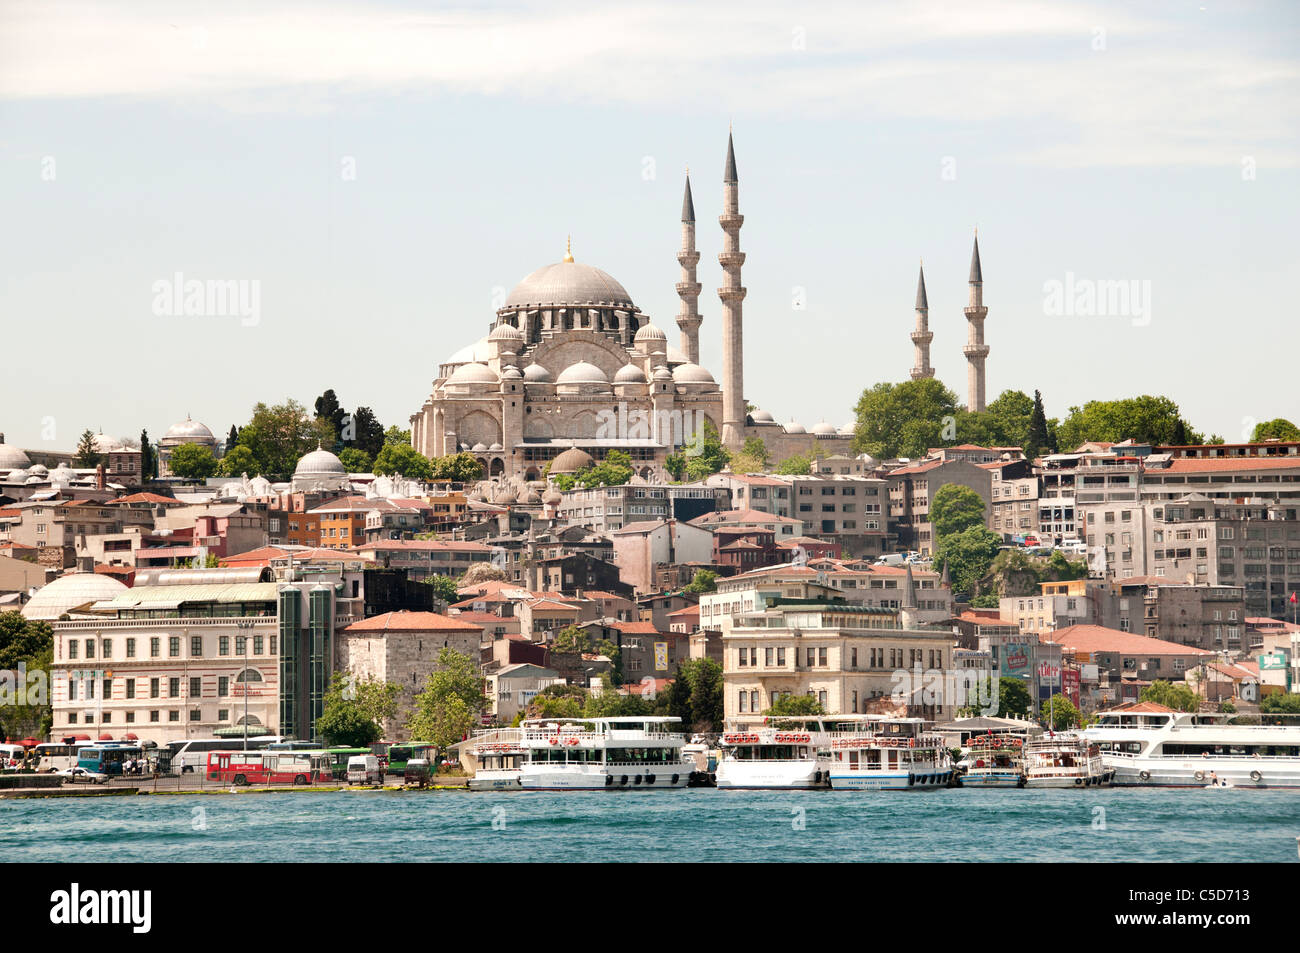 La moschea di Suleymaniye Camii Istanbul Turchia Golden Horn Foto Stock